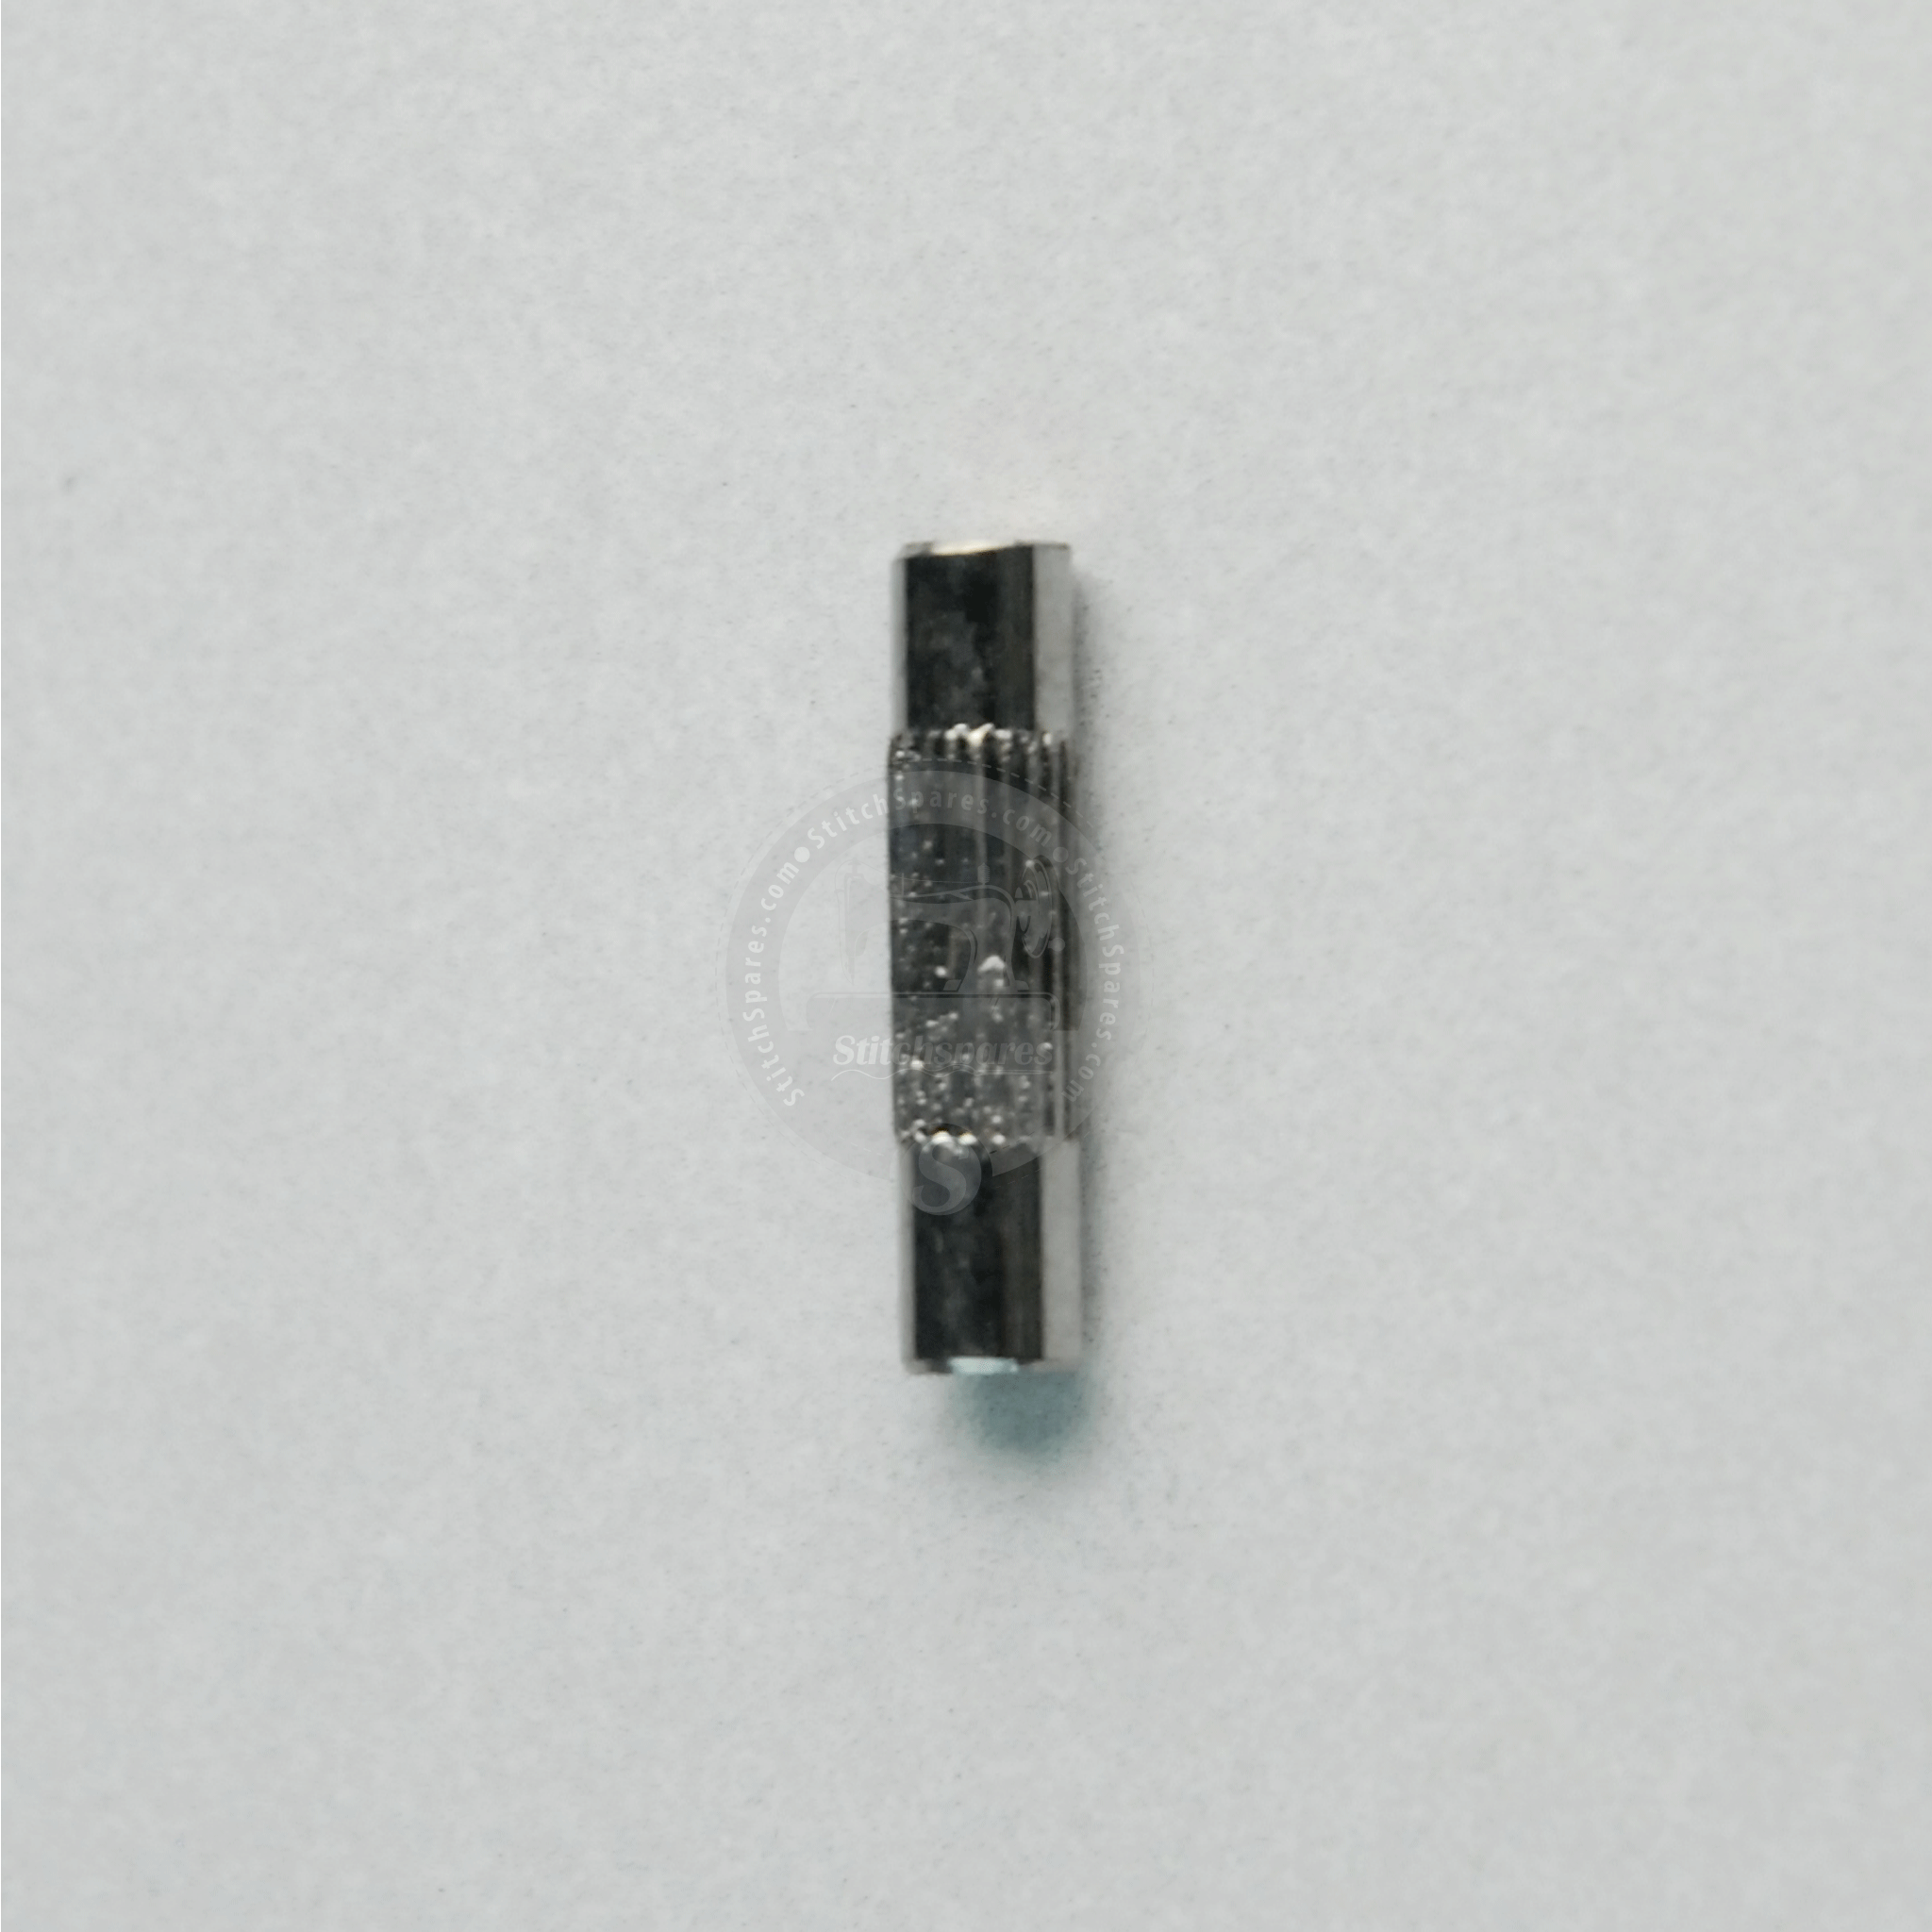 B2735-761-000 Pin Juki Knopflochmaschine